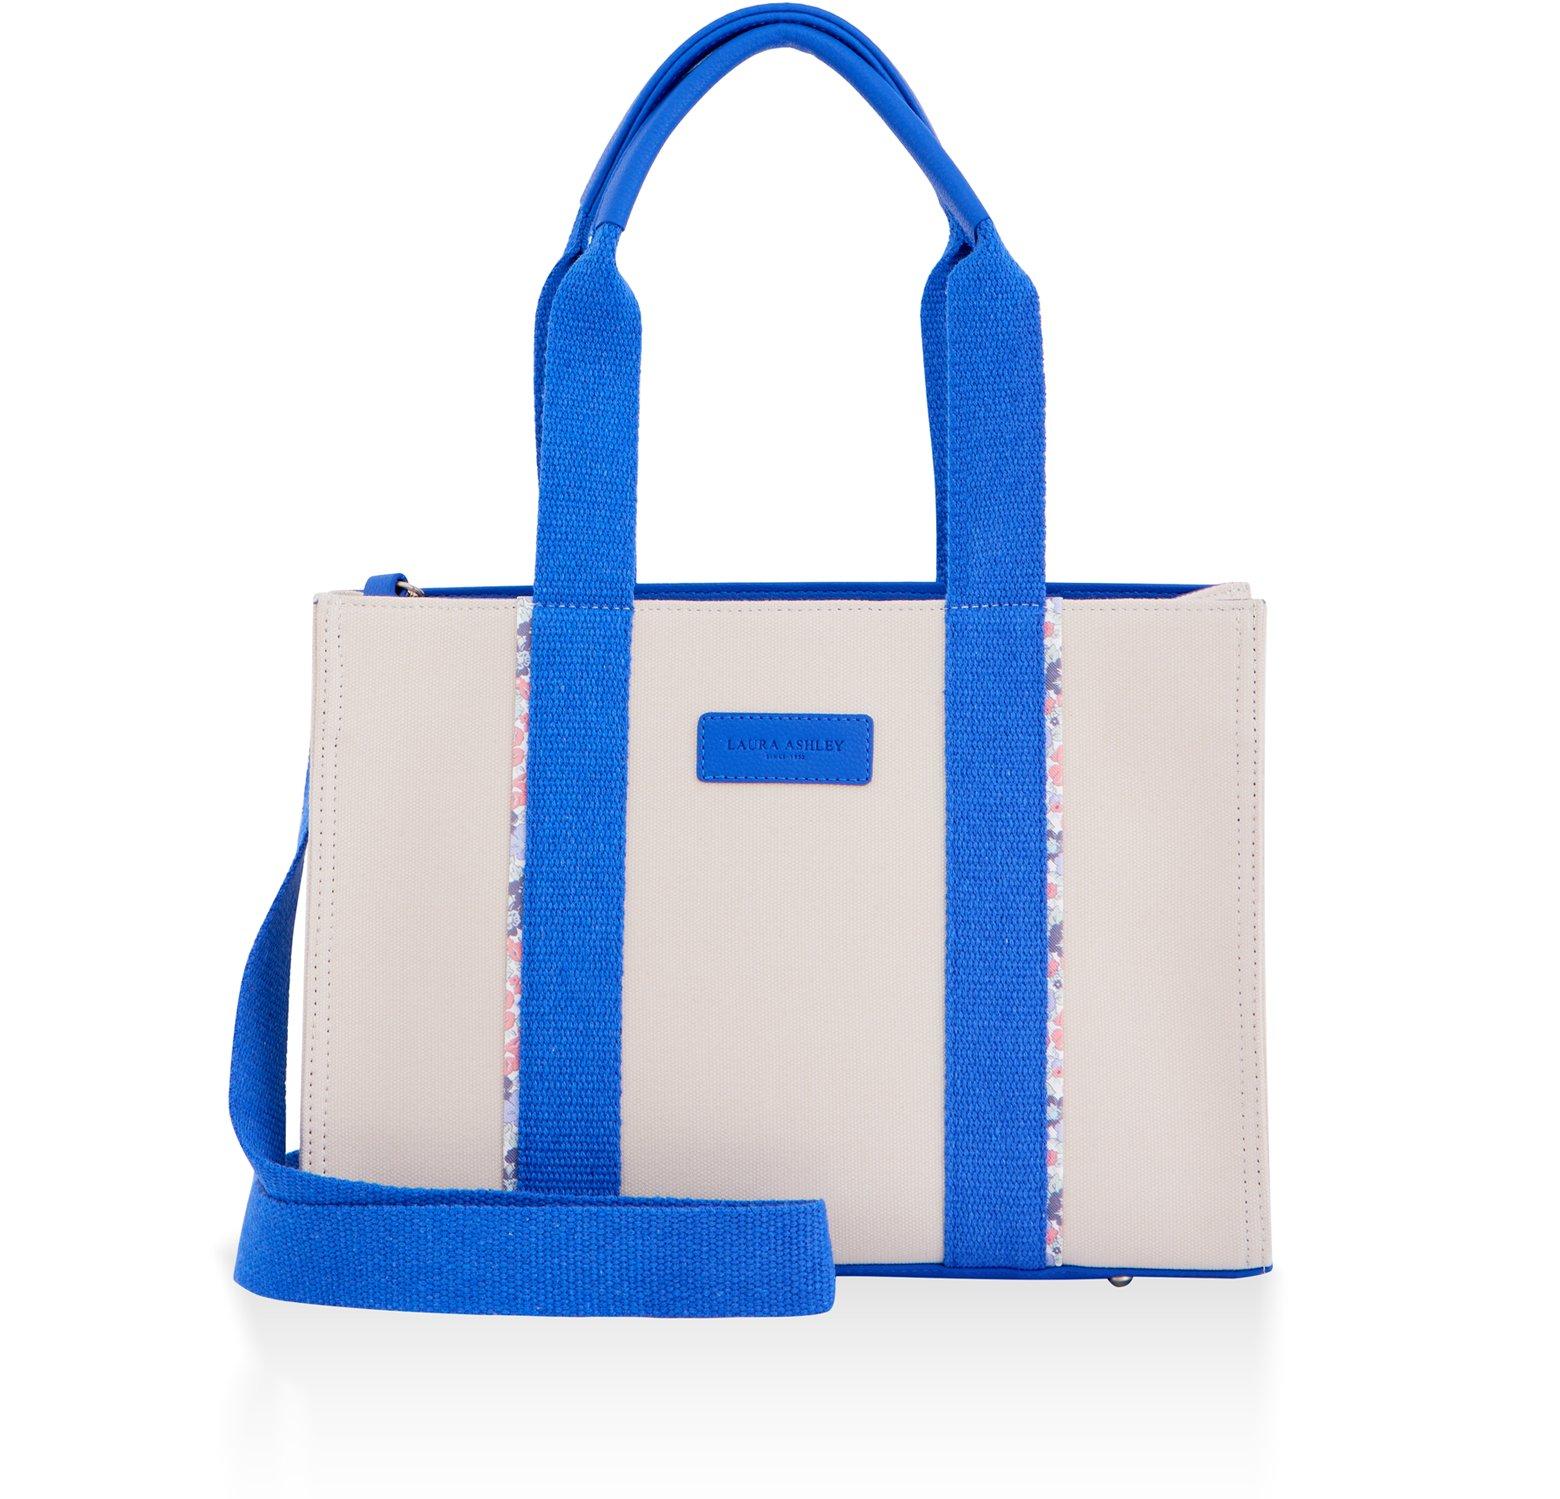 Luara Ashley blue | Tote Bag